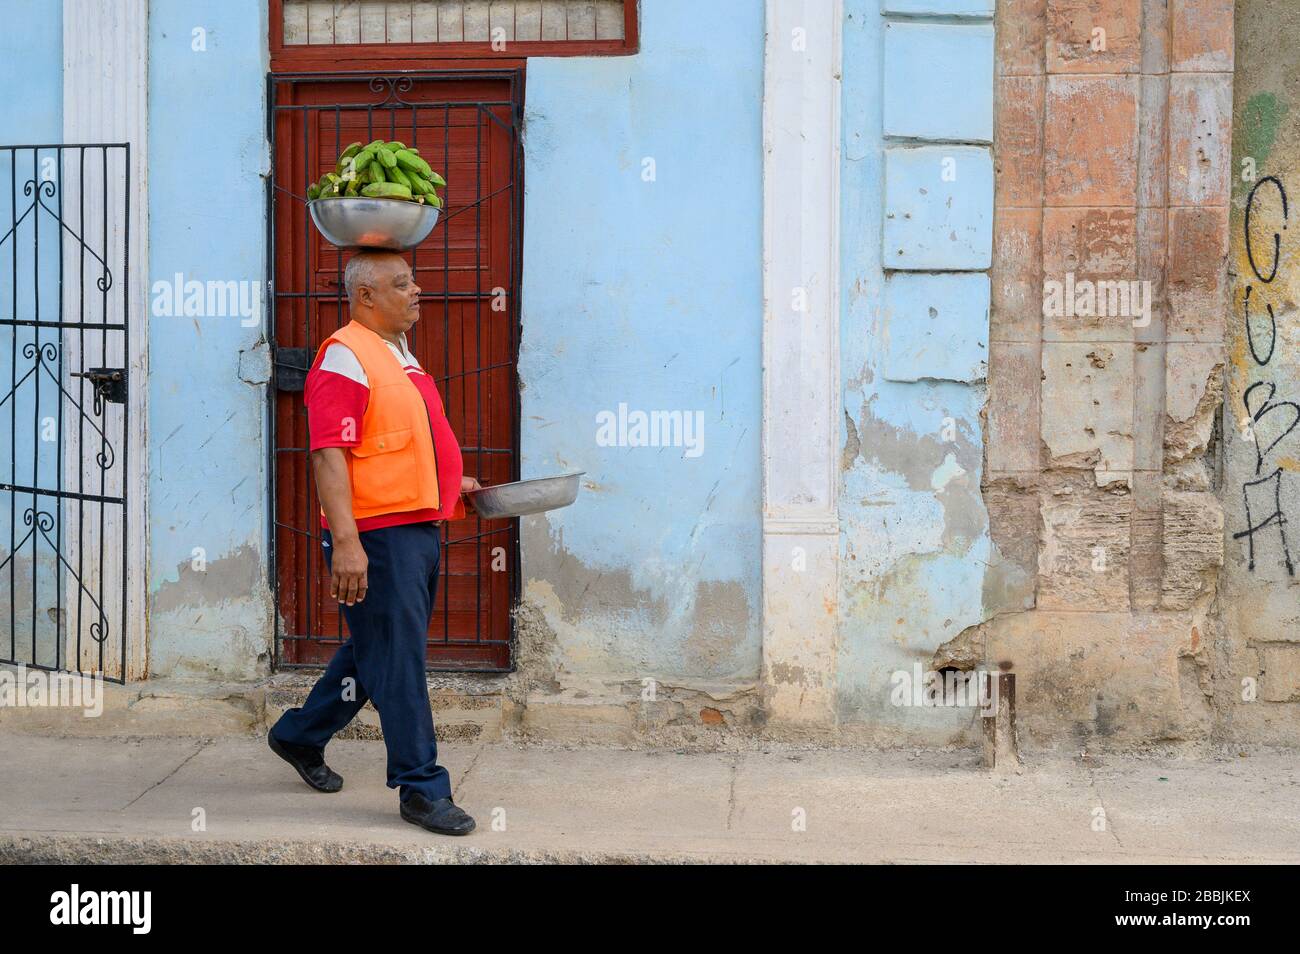 Man balancing bowl of plantain on head, Havana, Cuba Stock Photo